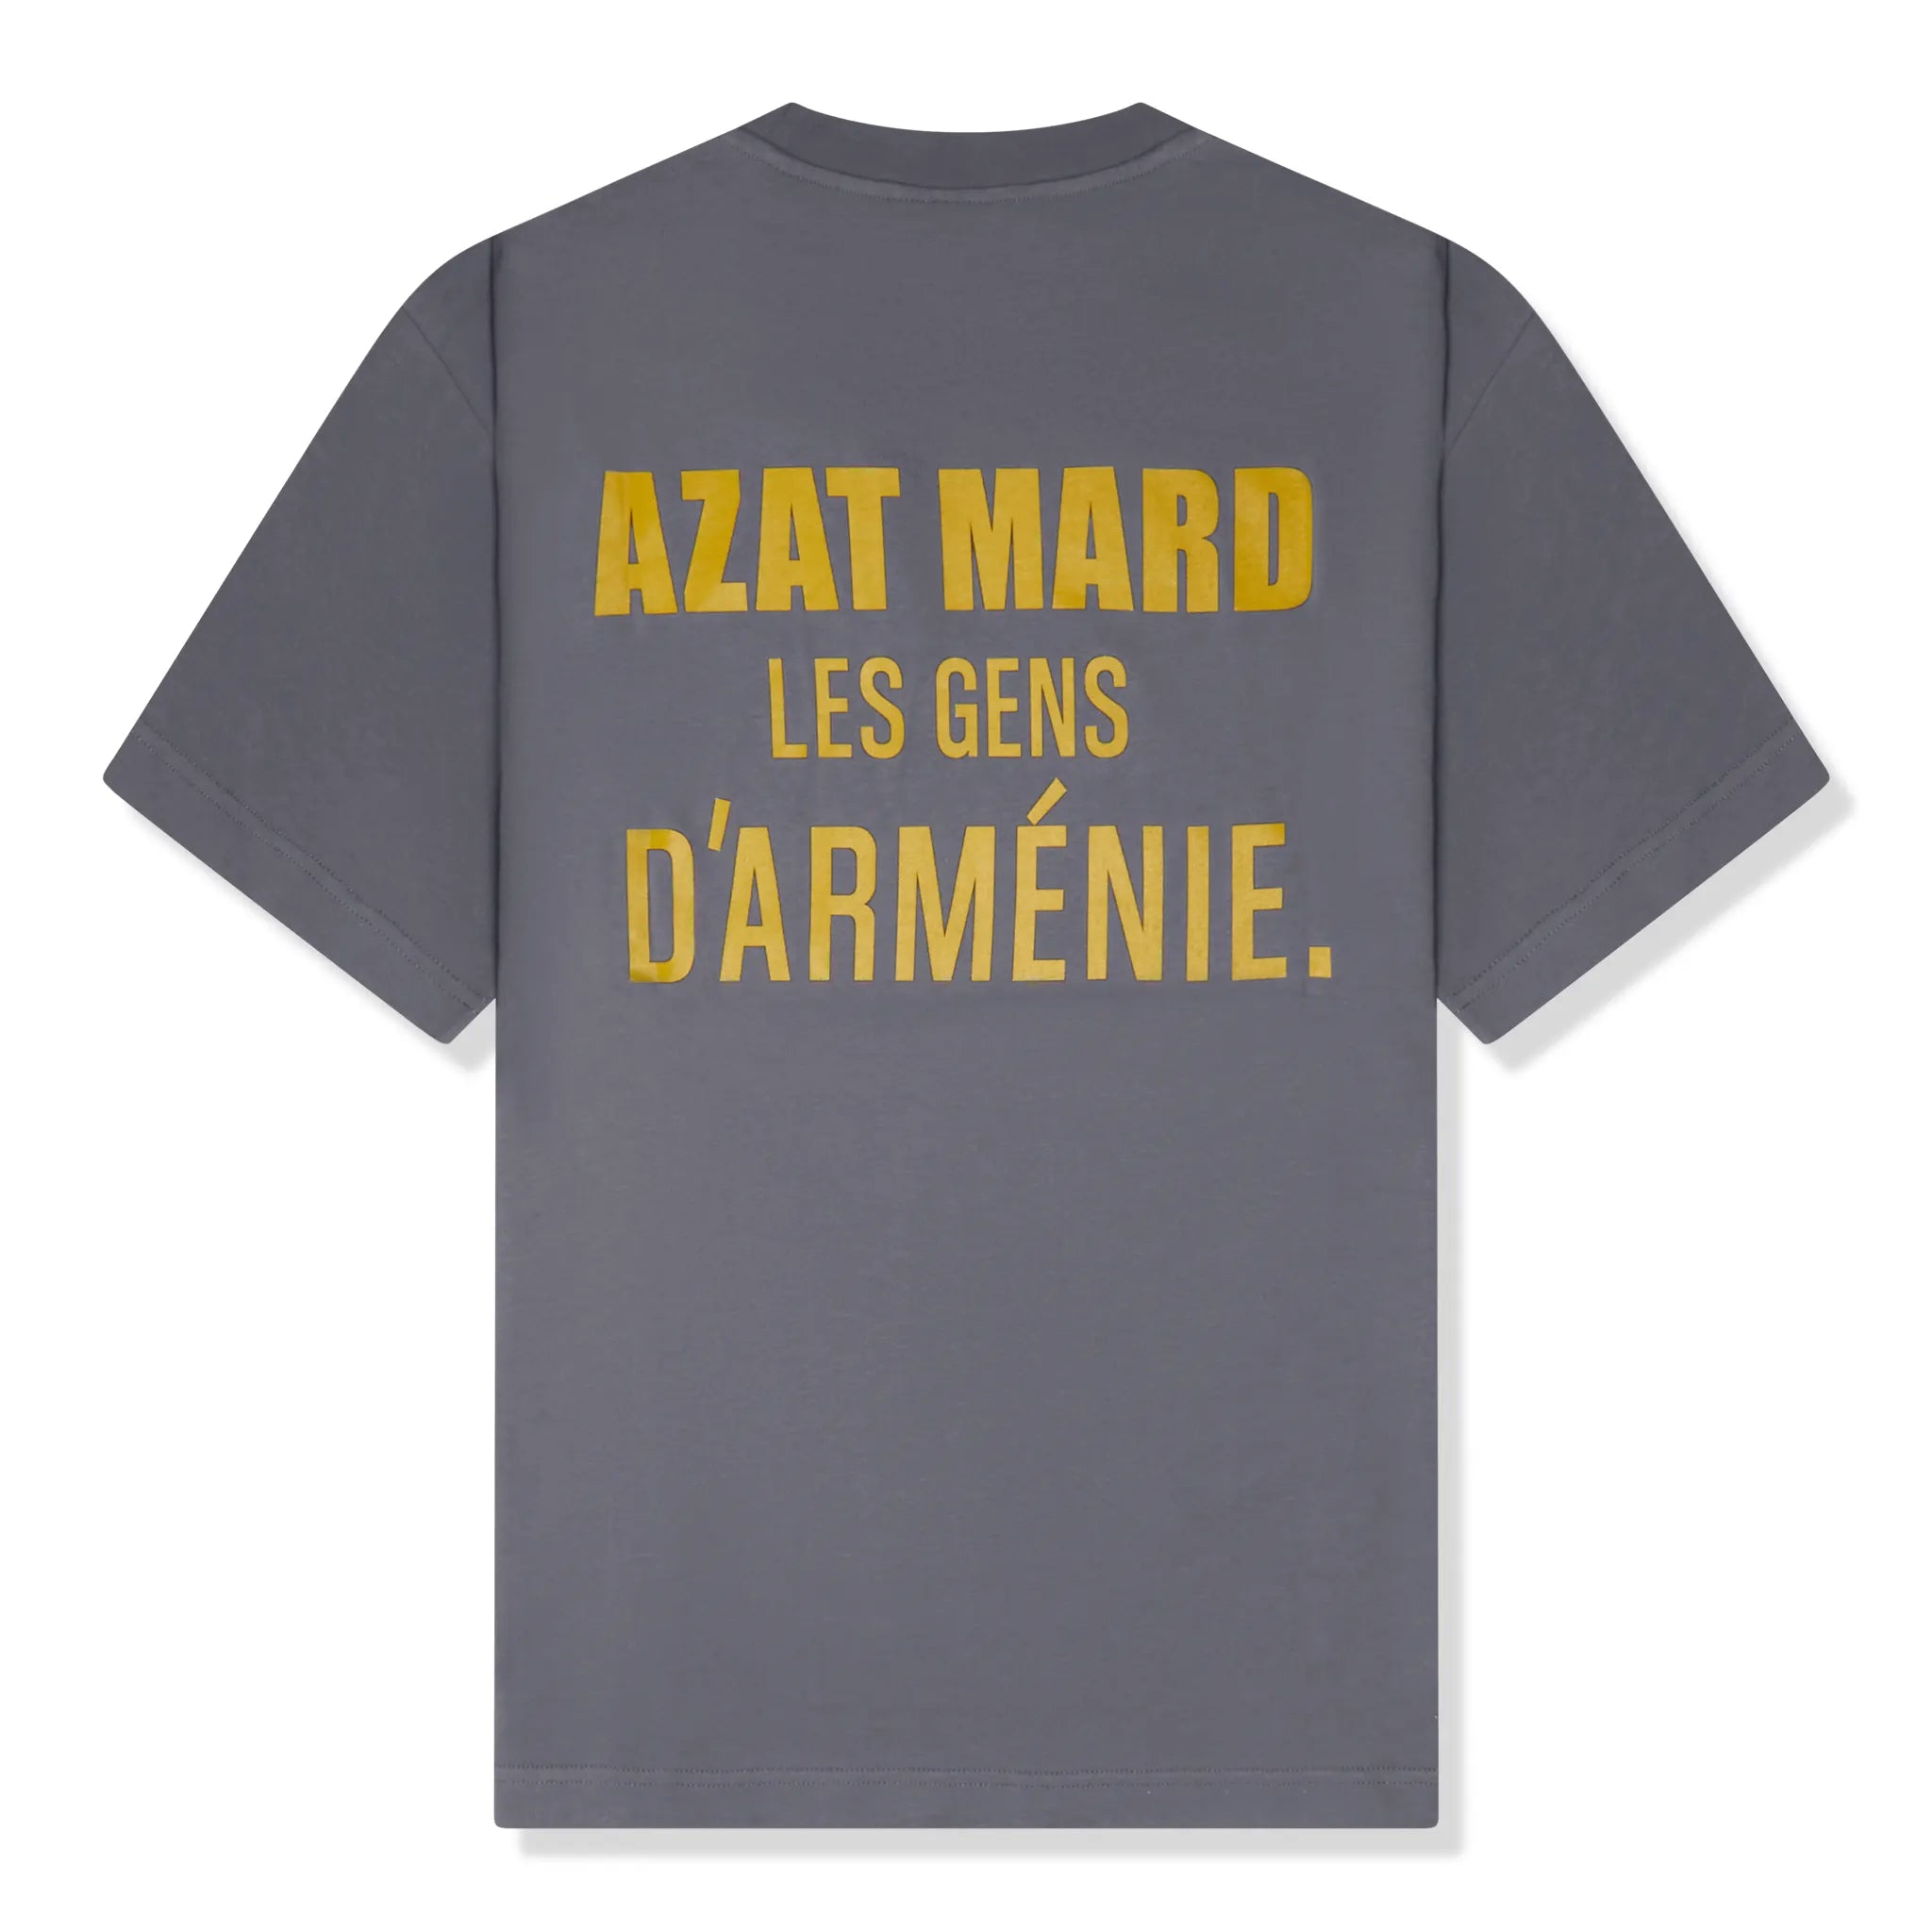 Back view of Azat Mard Les Gens T Shirt Charcoal